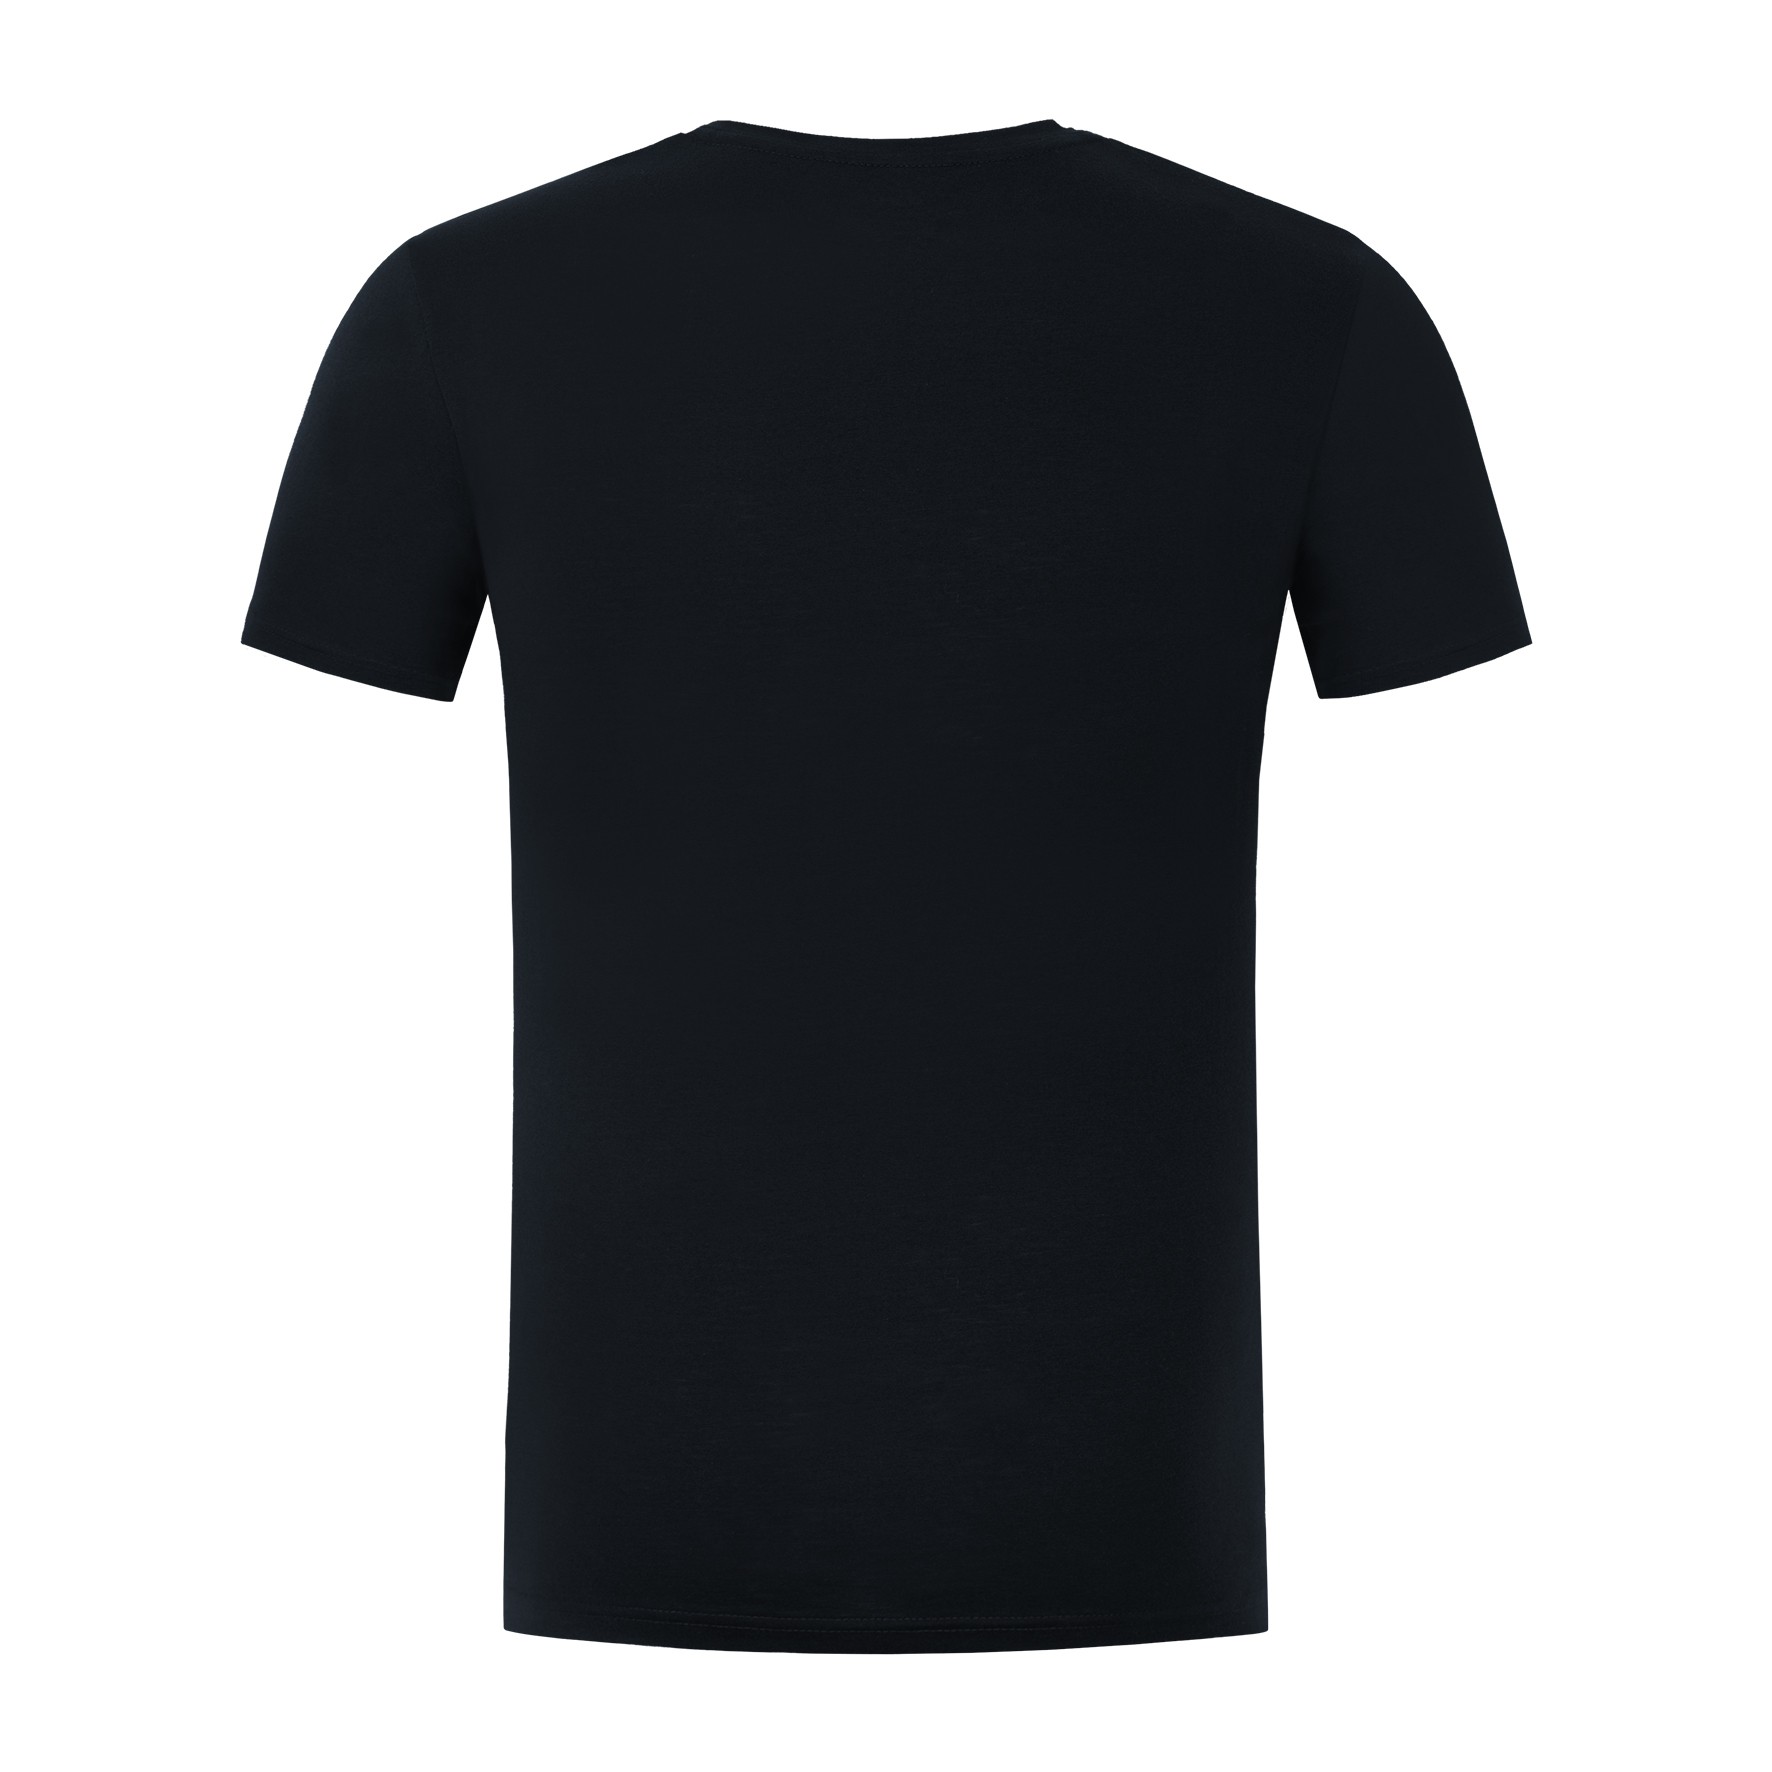 Korda Outline Tee Black T-Shirt